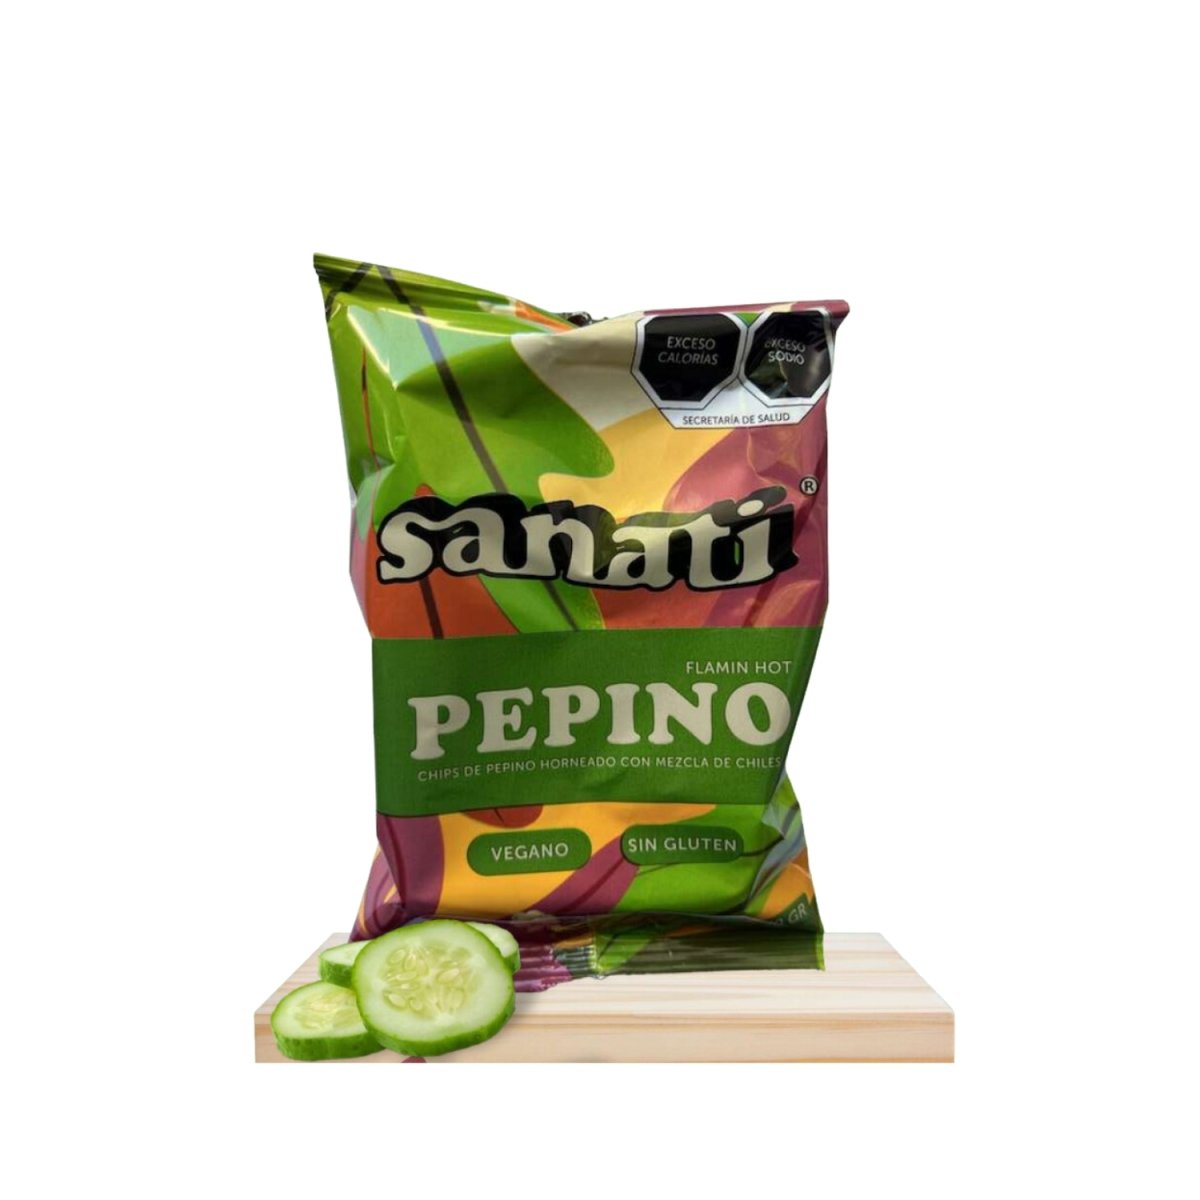 Chips de pepino flamin hot - Good Express mx